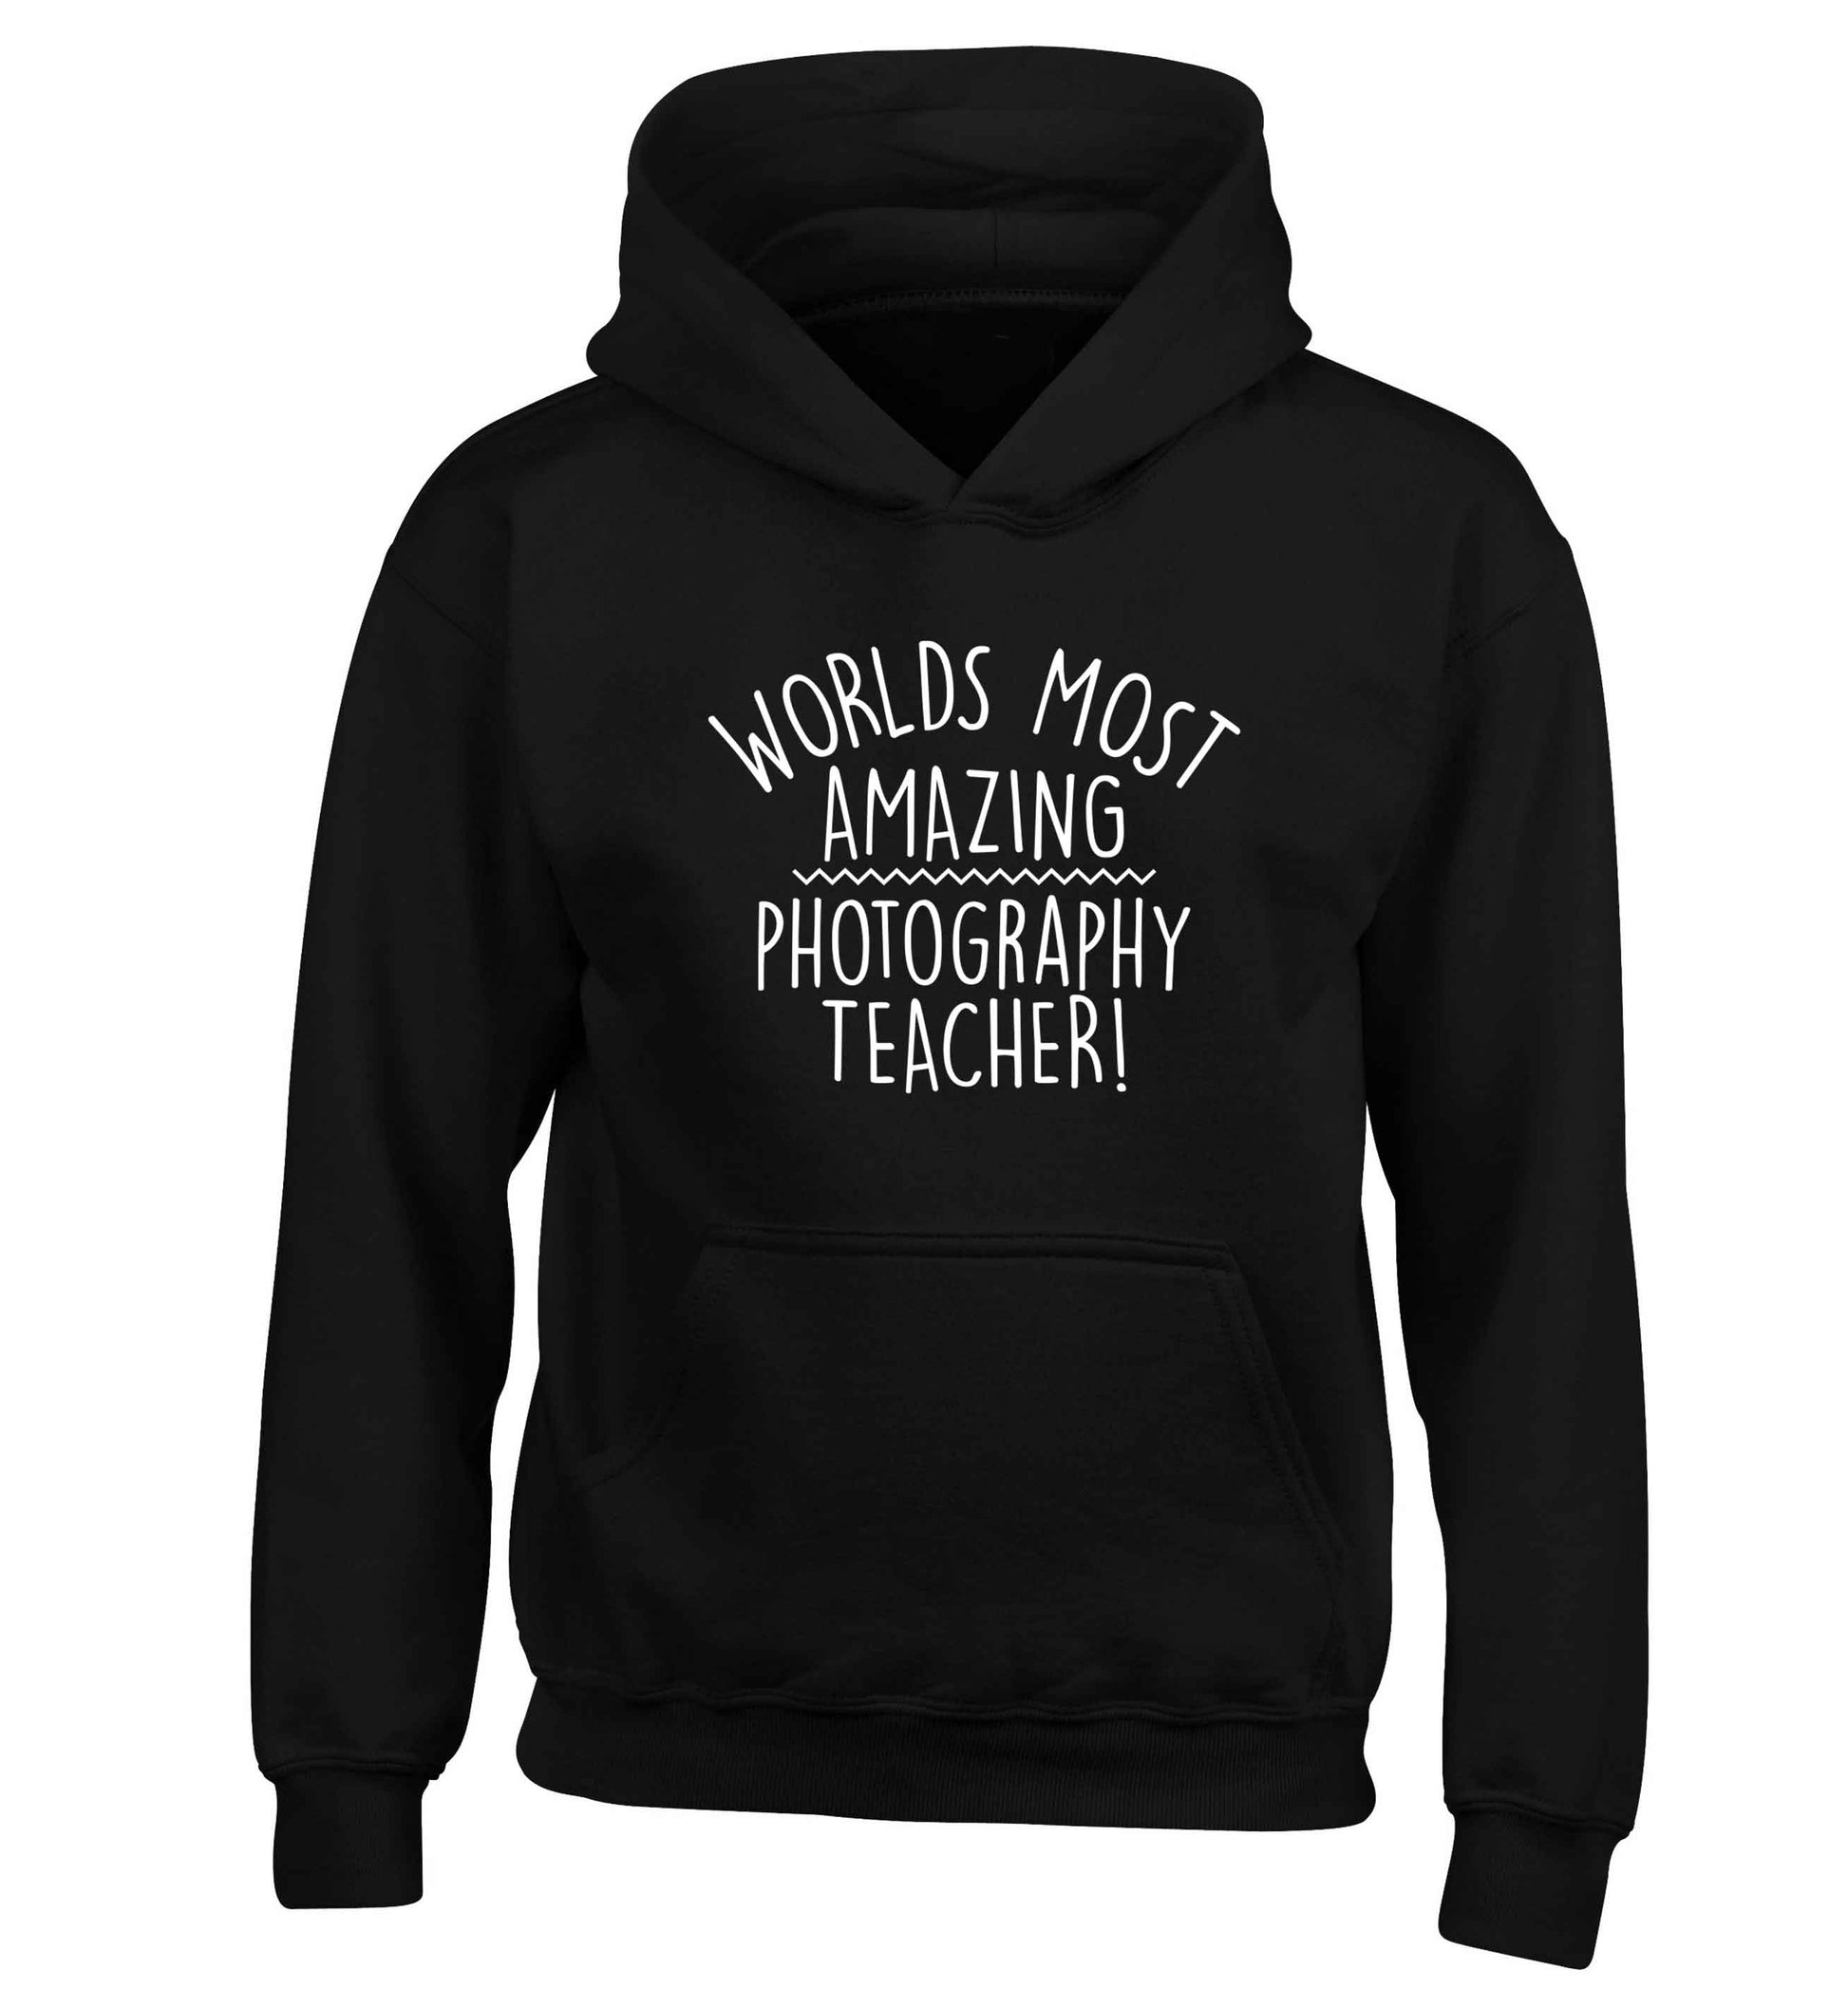 Worlds most amazing photography teacher children's black hoodie 12-13 Years